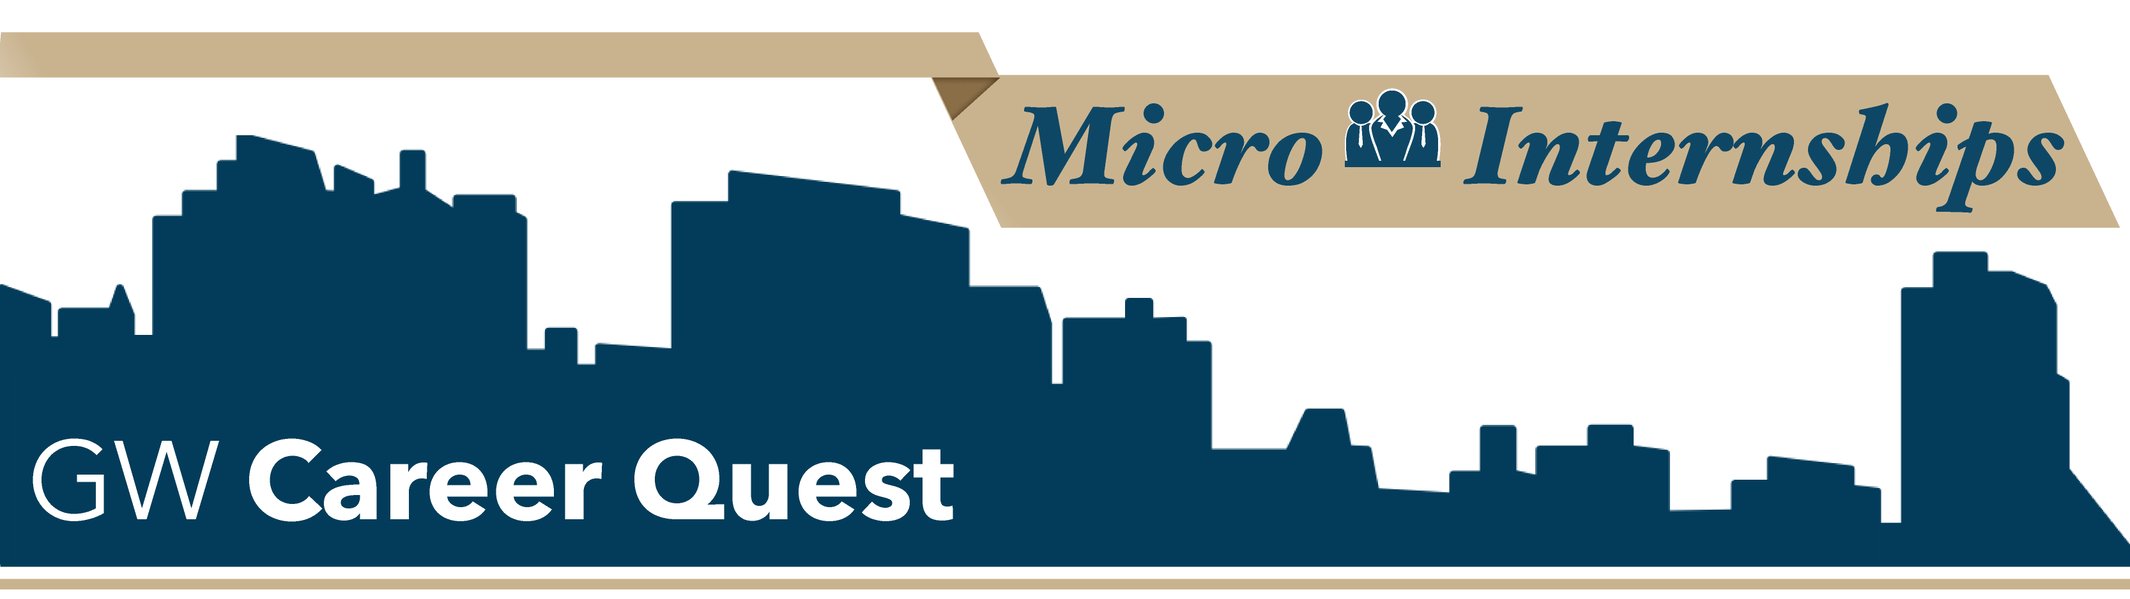 GWU Career Quest Micro-Internship Program Logo